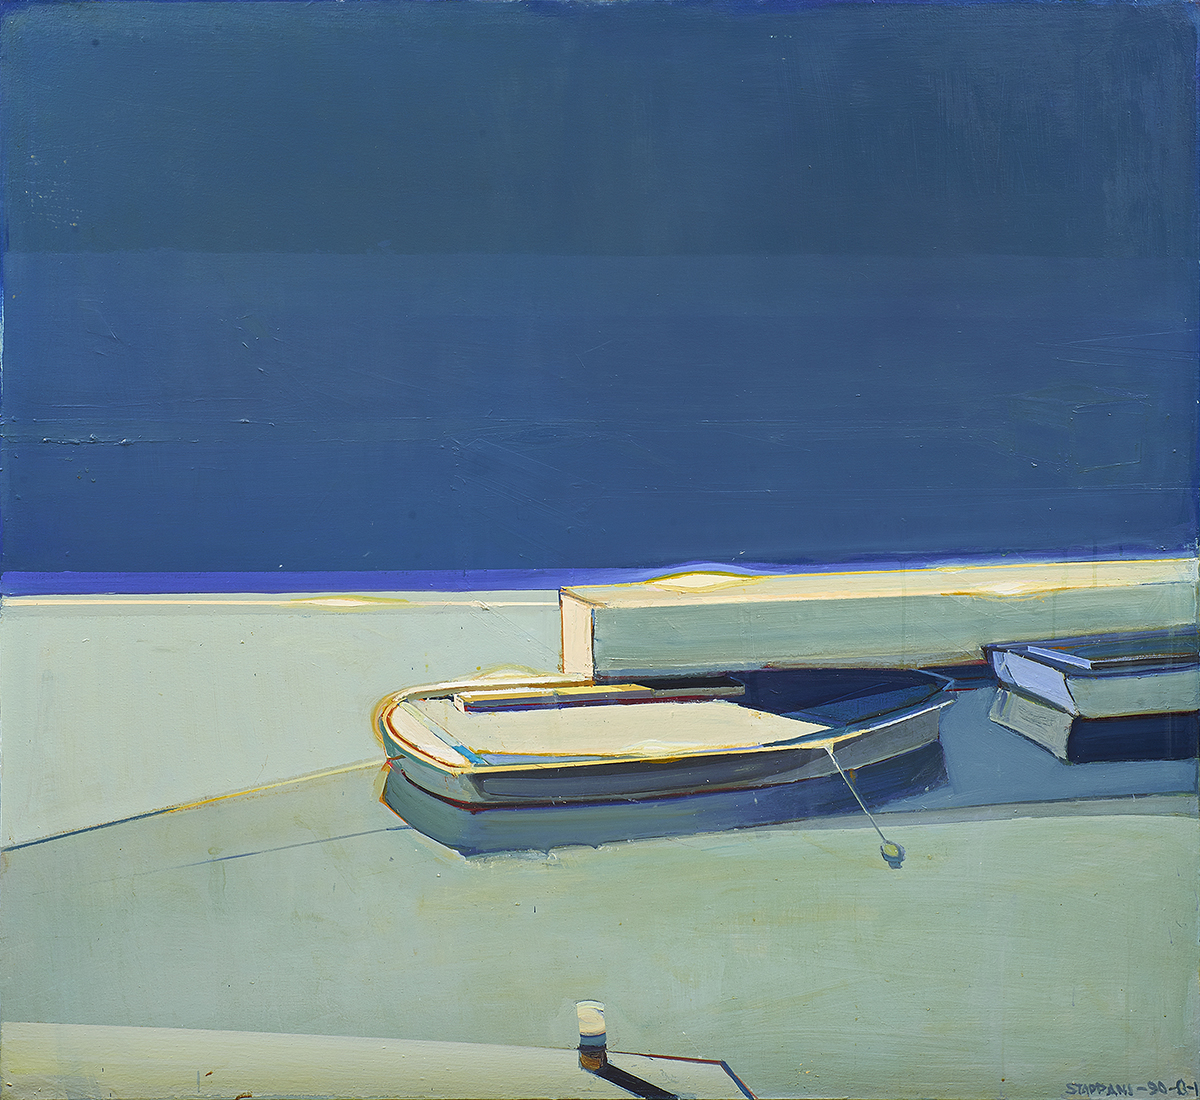 Raimonds Staprans (American/Latvian, b. 1926), Blue Boats, 1990, oil on canvas, 44" x 48".Sold: $187,500